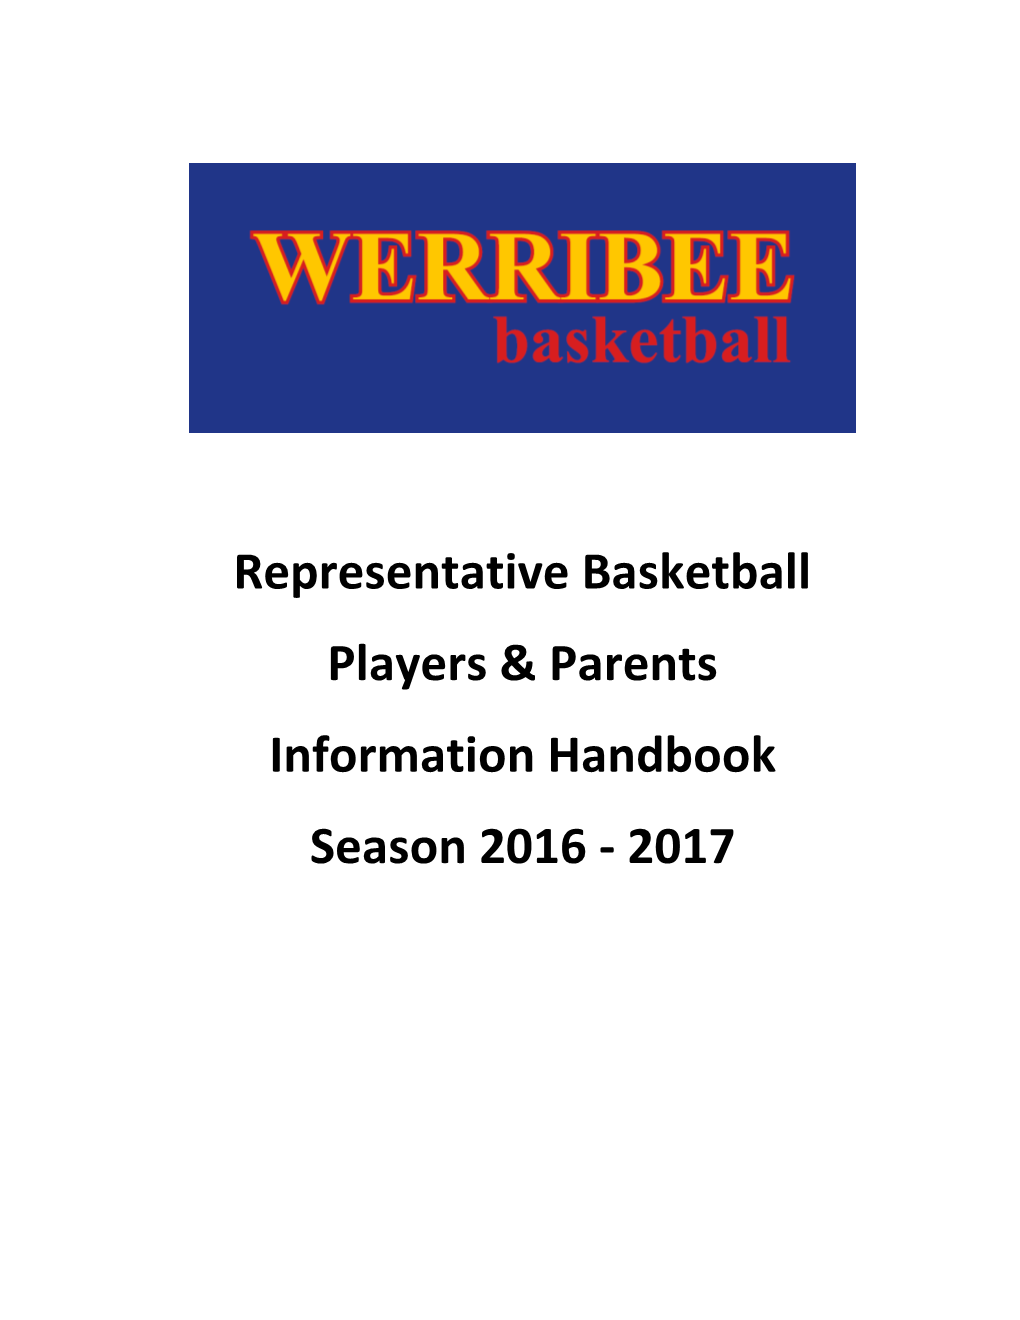 The Werribee Basketball Association